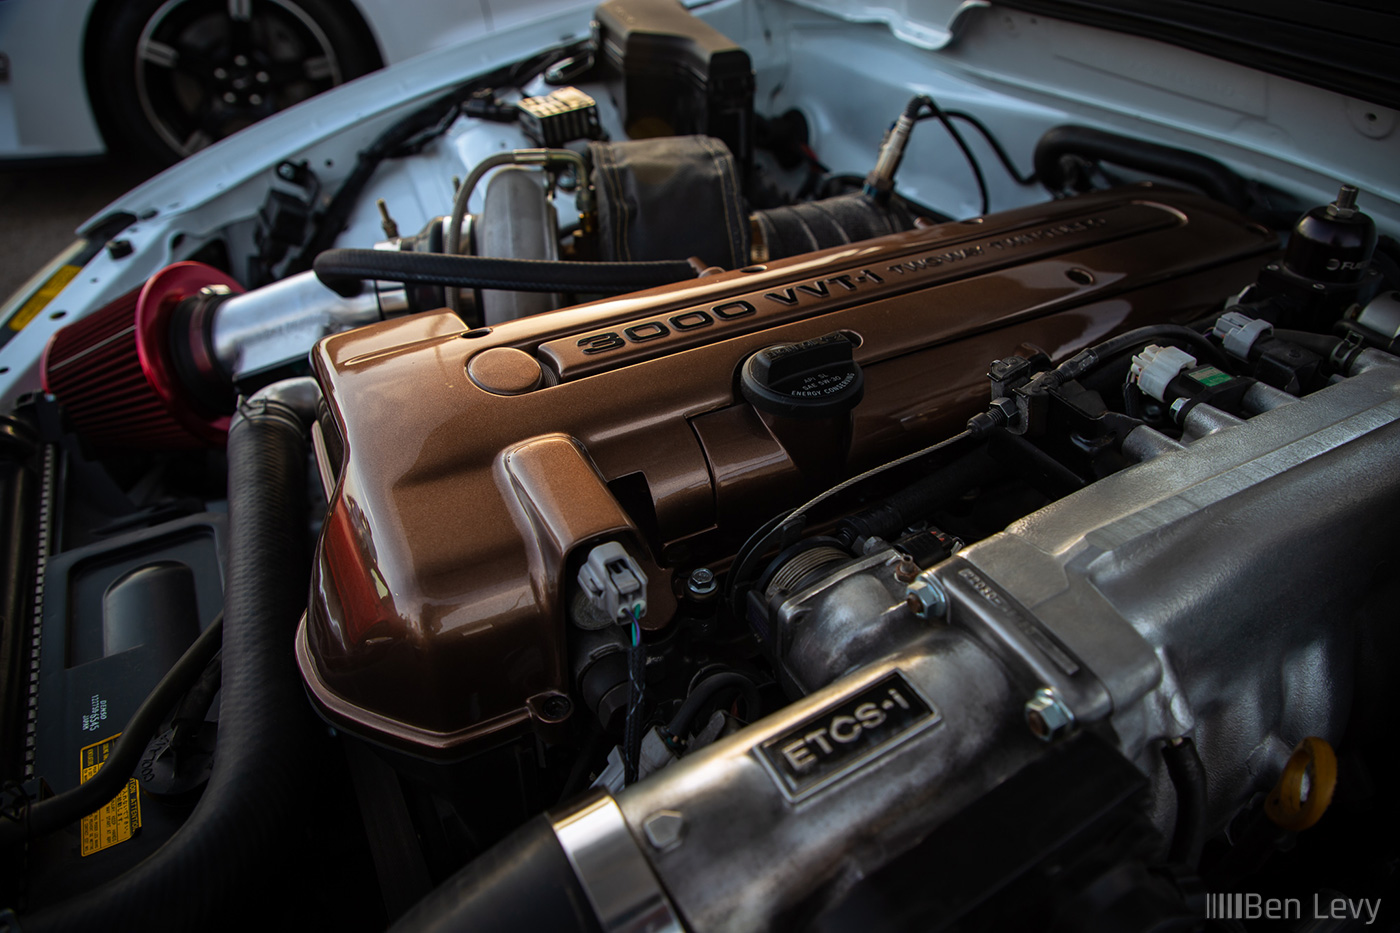 Lexus IS300 valve cover painted brown